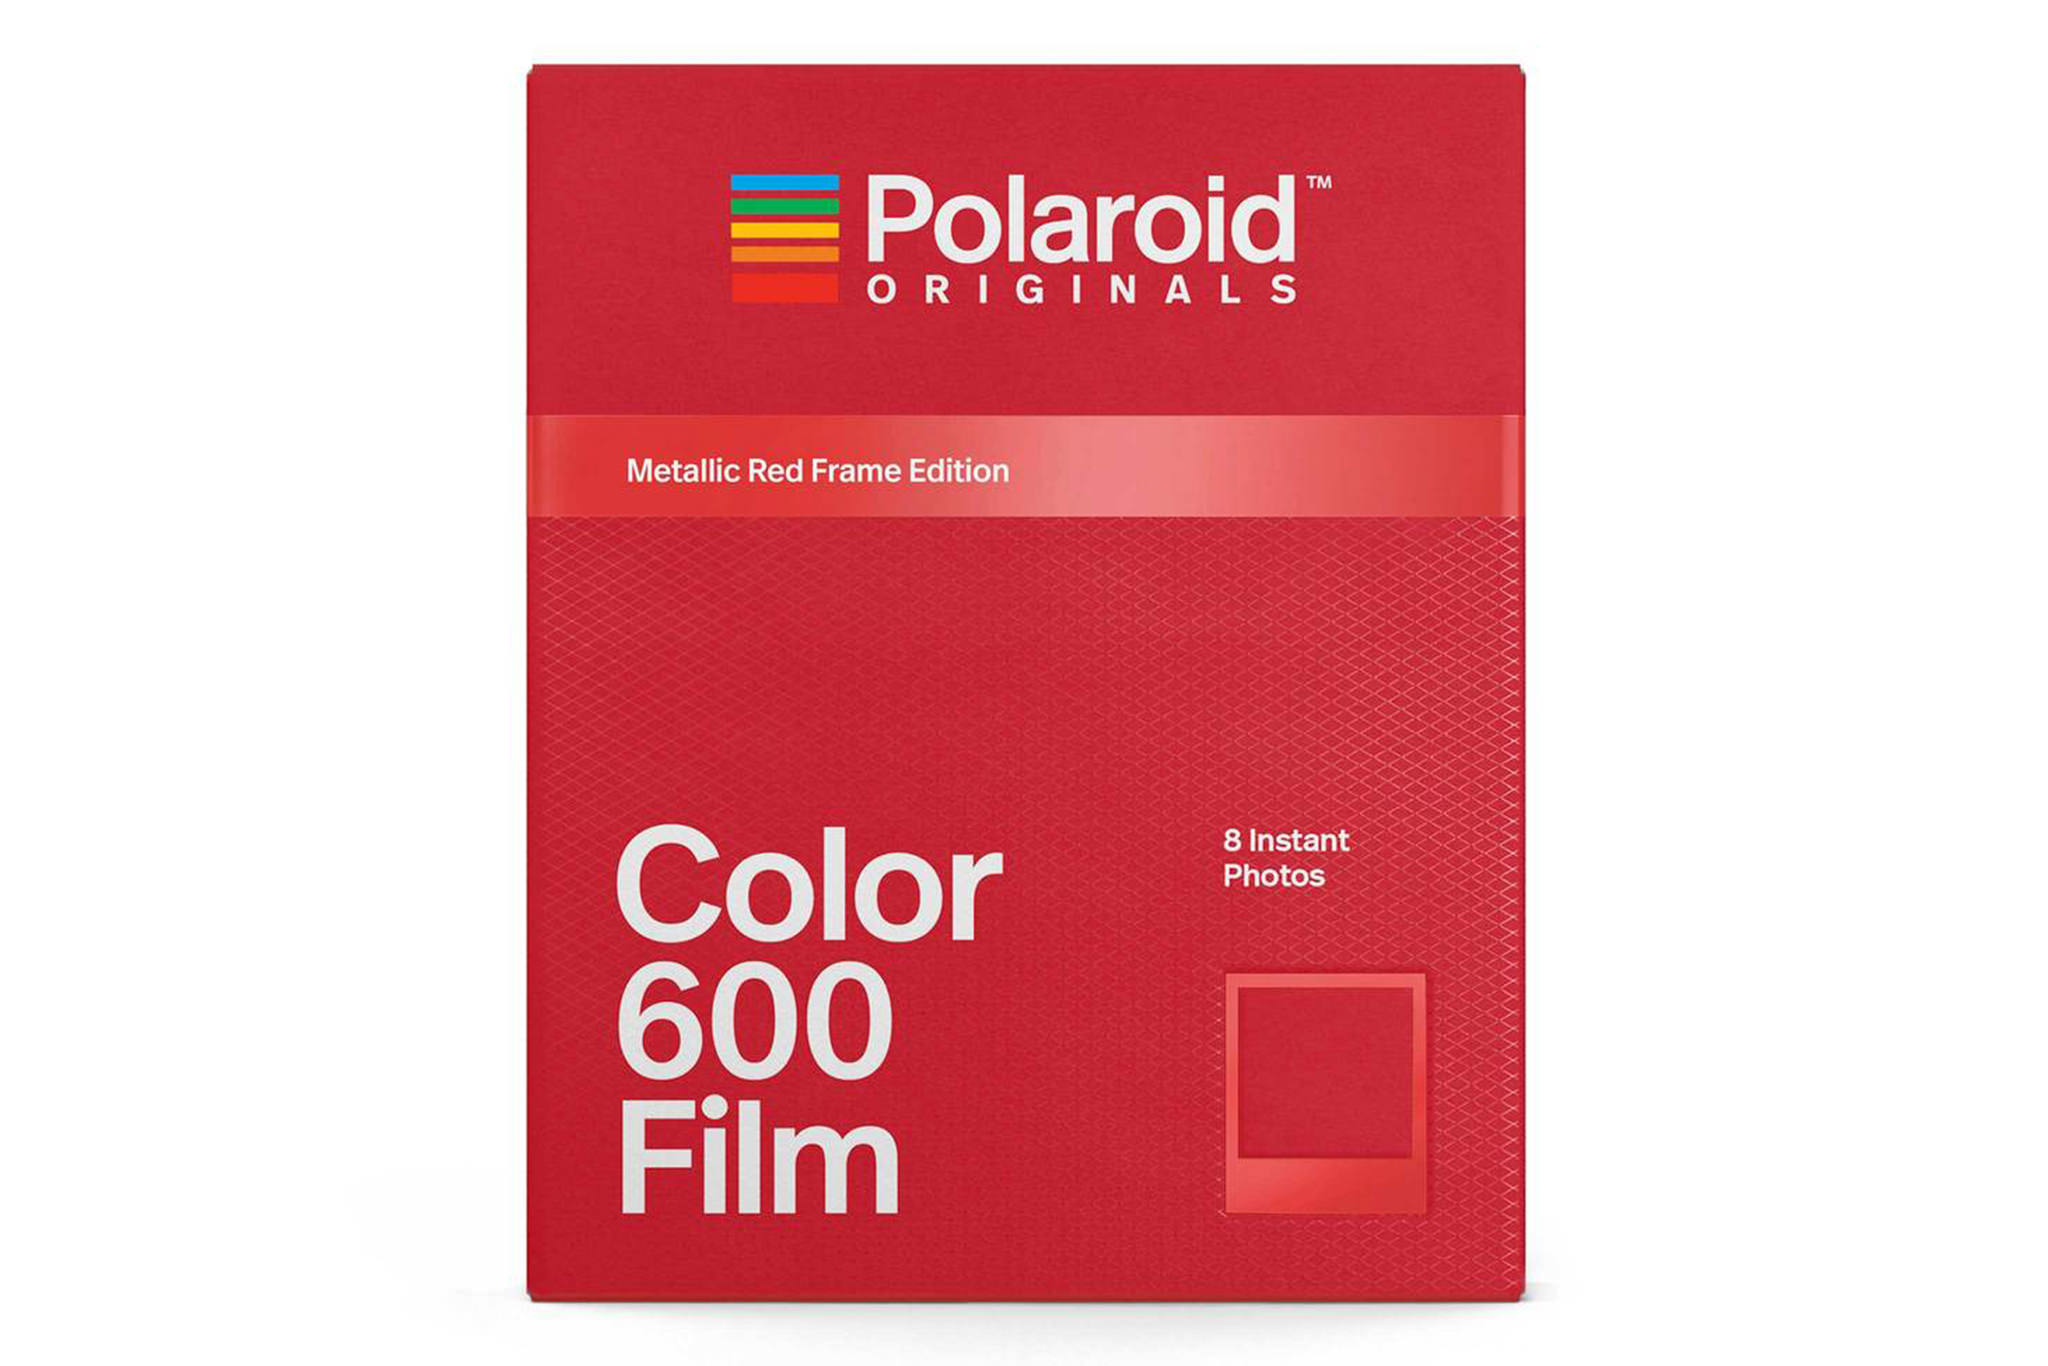 polaroid-originals-color-instant-film-for-600-metallic-red-frame-edition